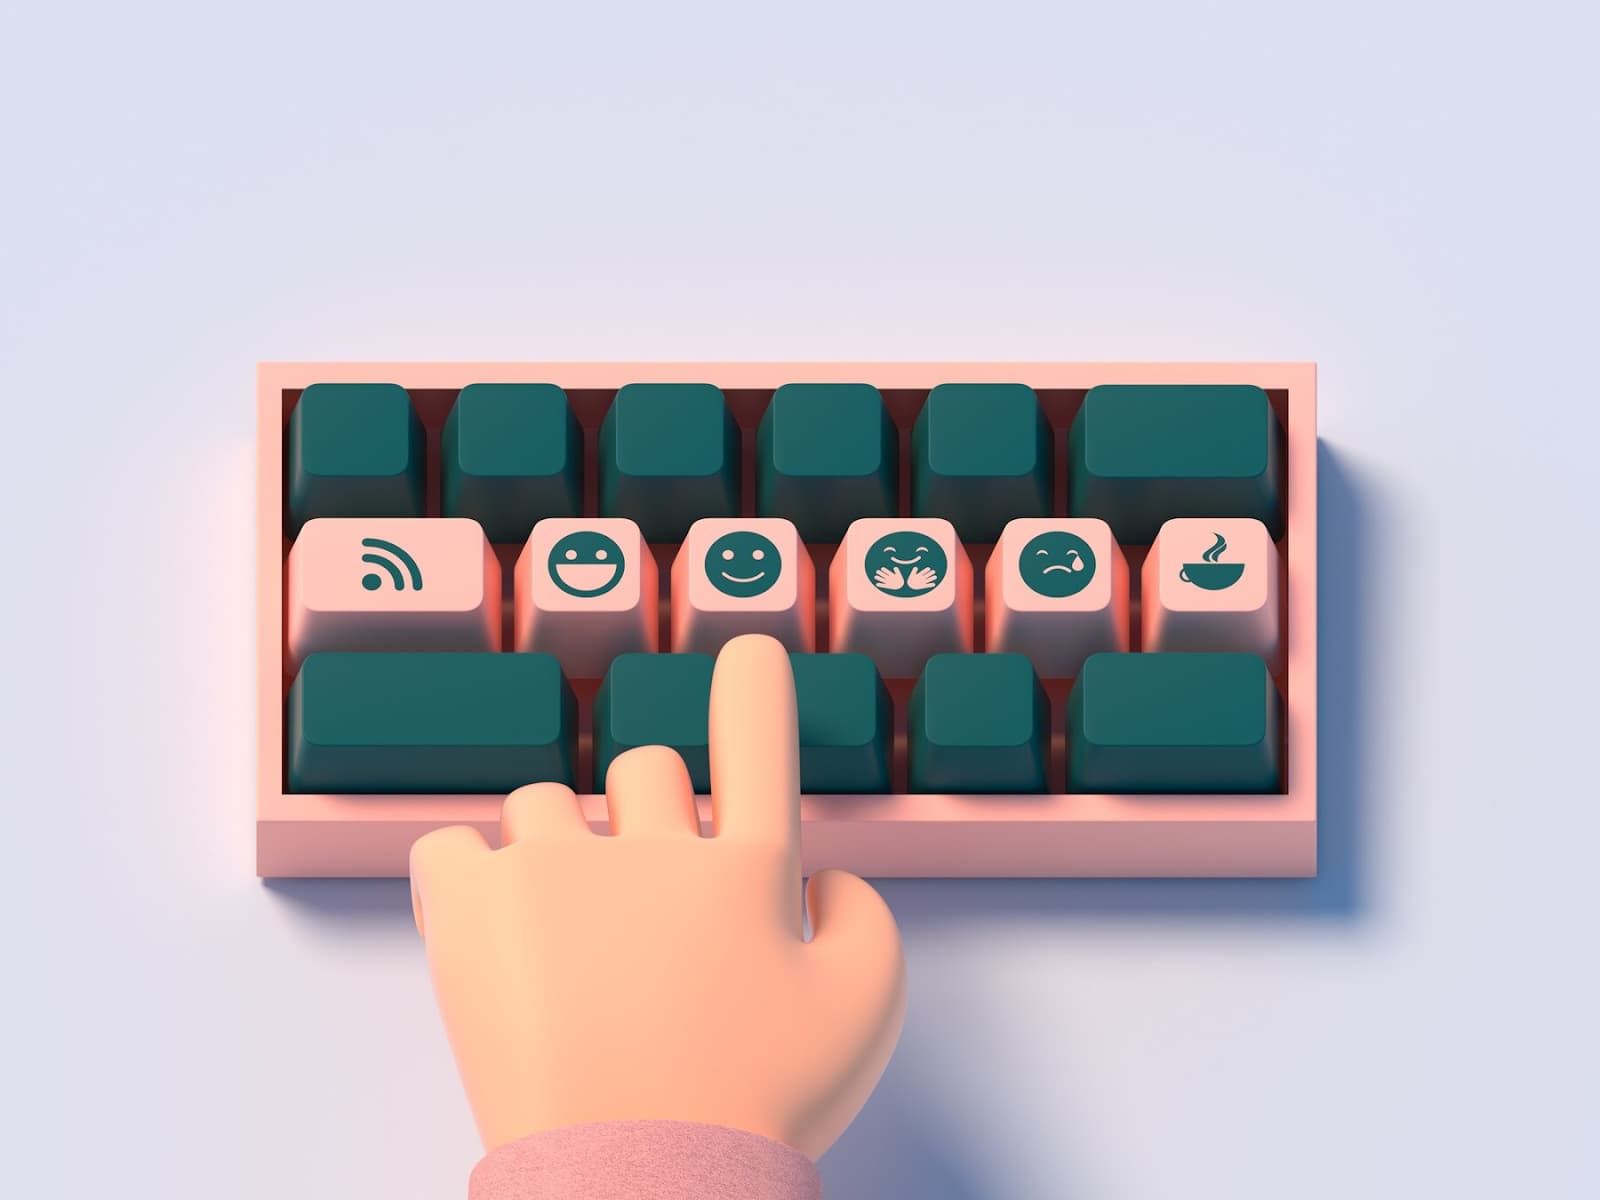 Finger presses the keyboard